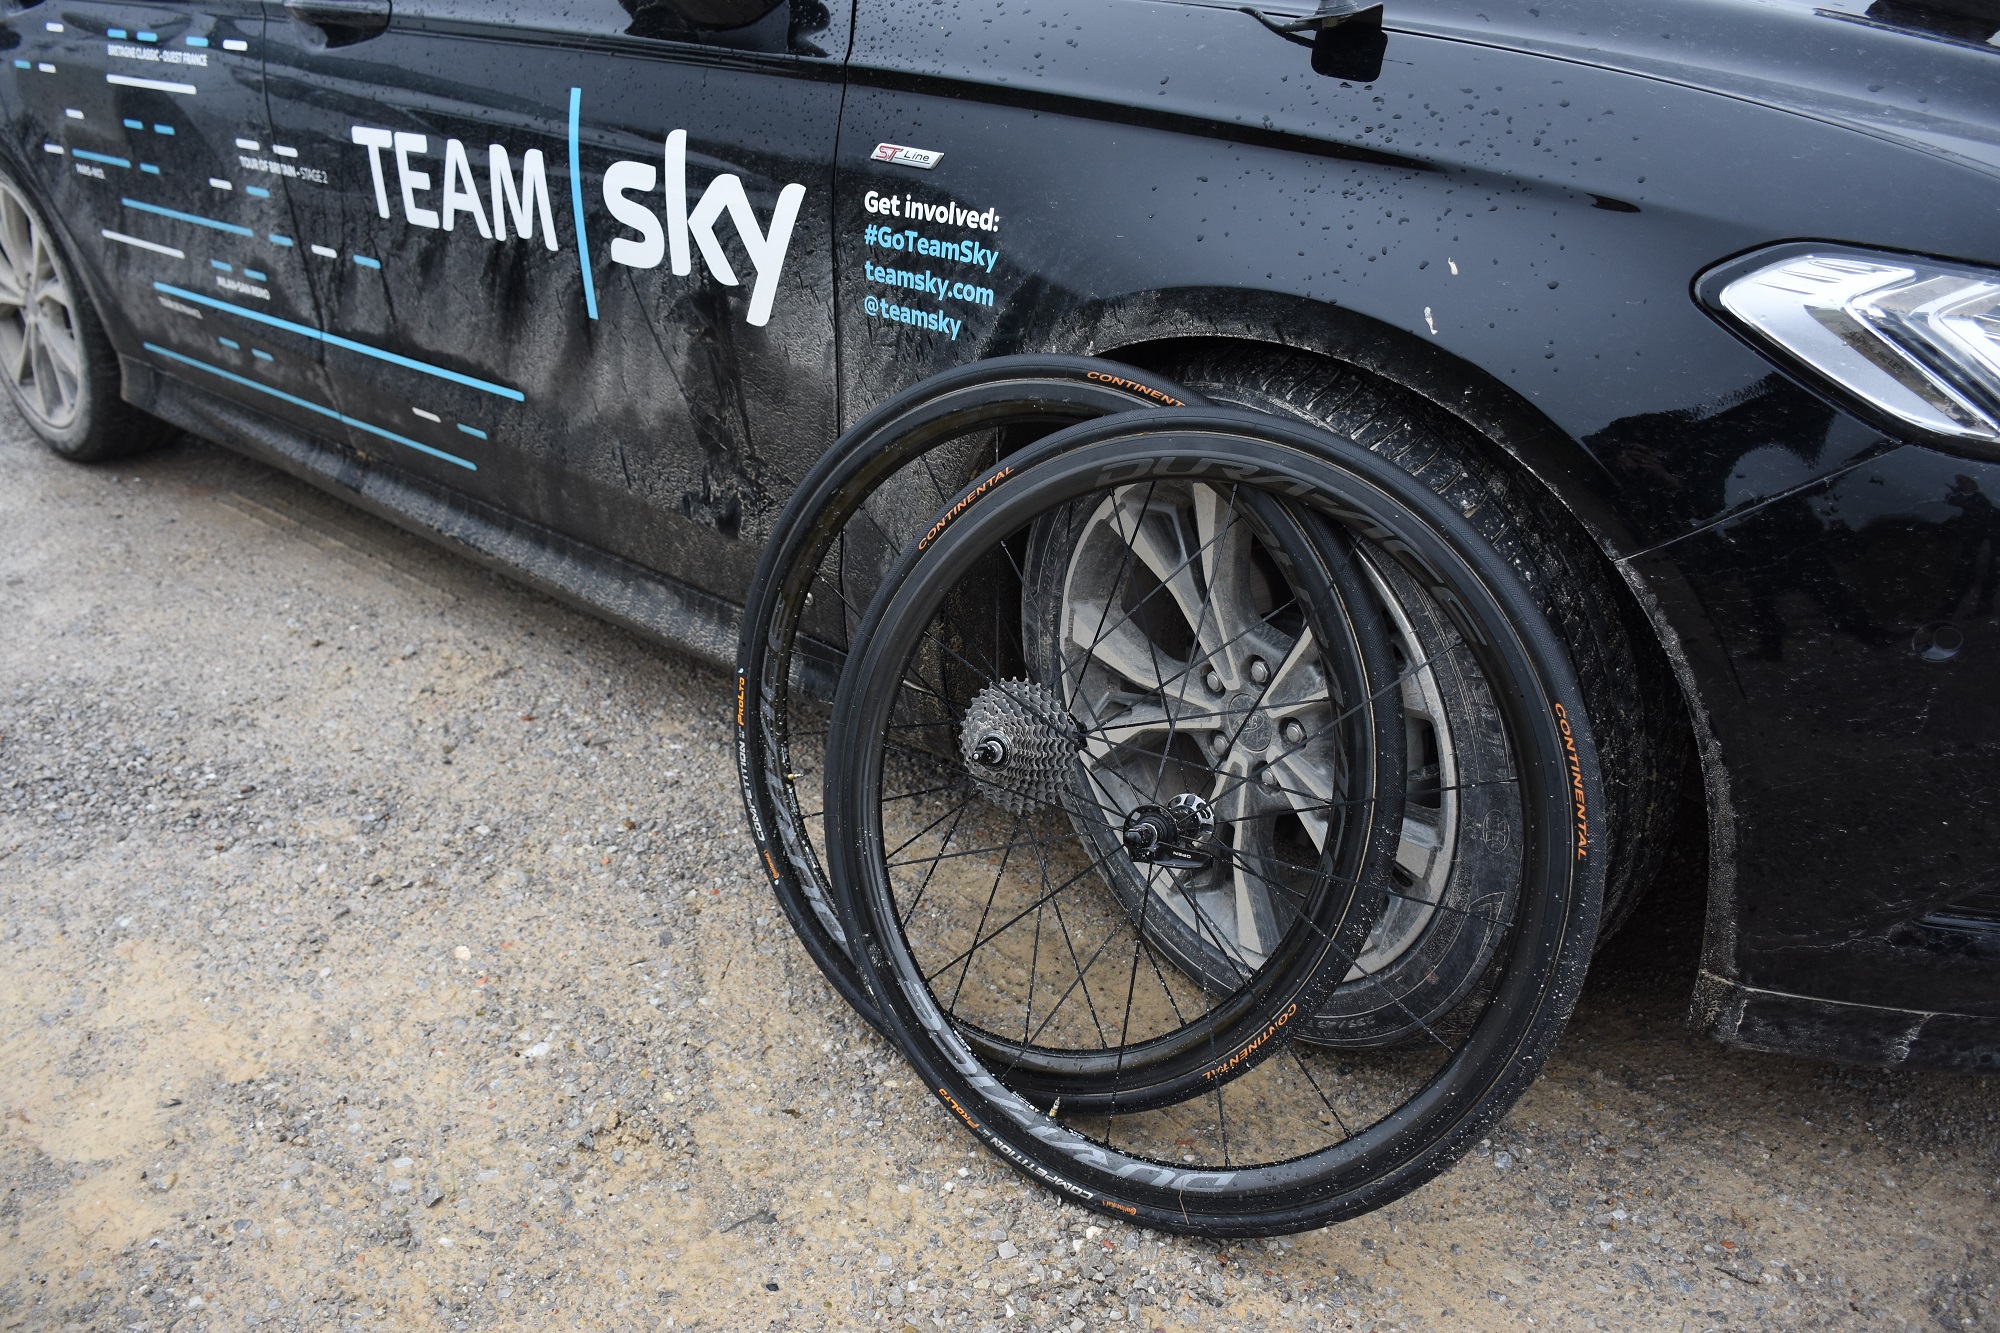 shimano dura-ace wheels against a team sky car